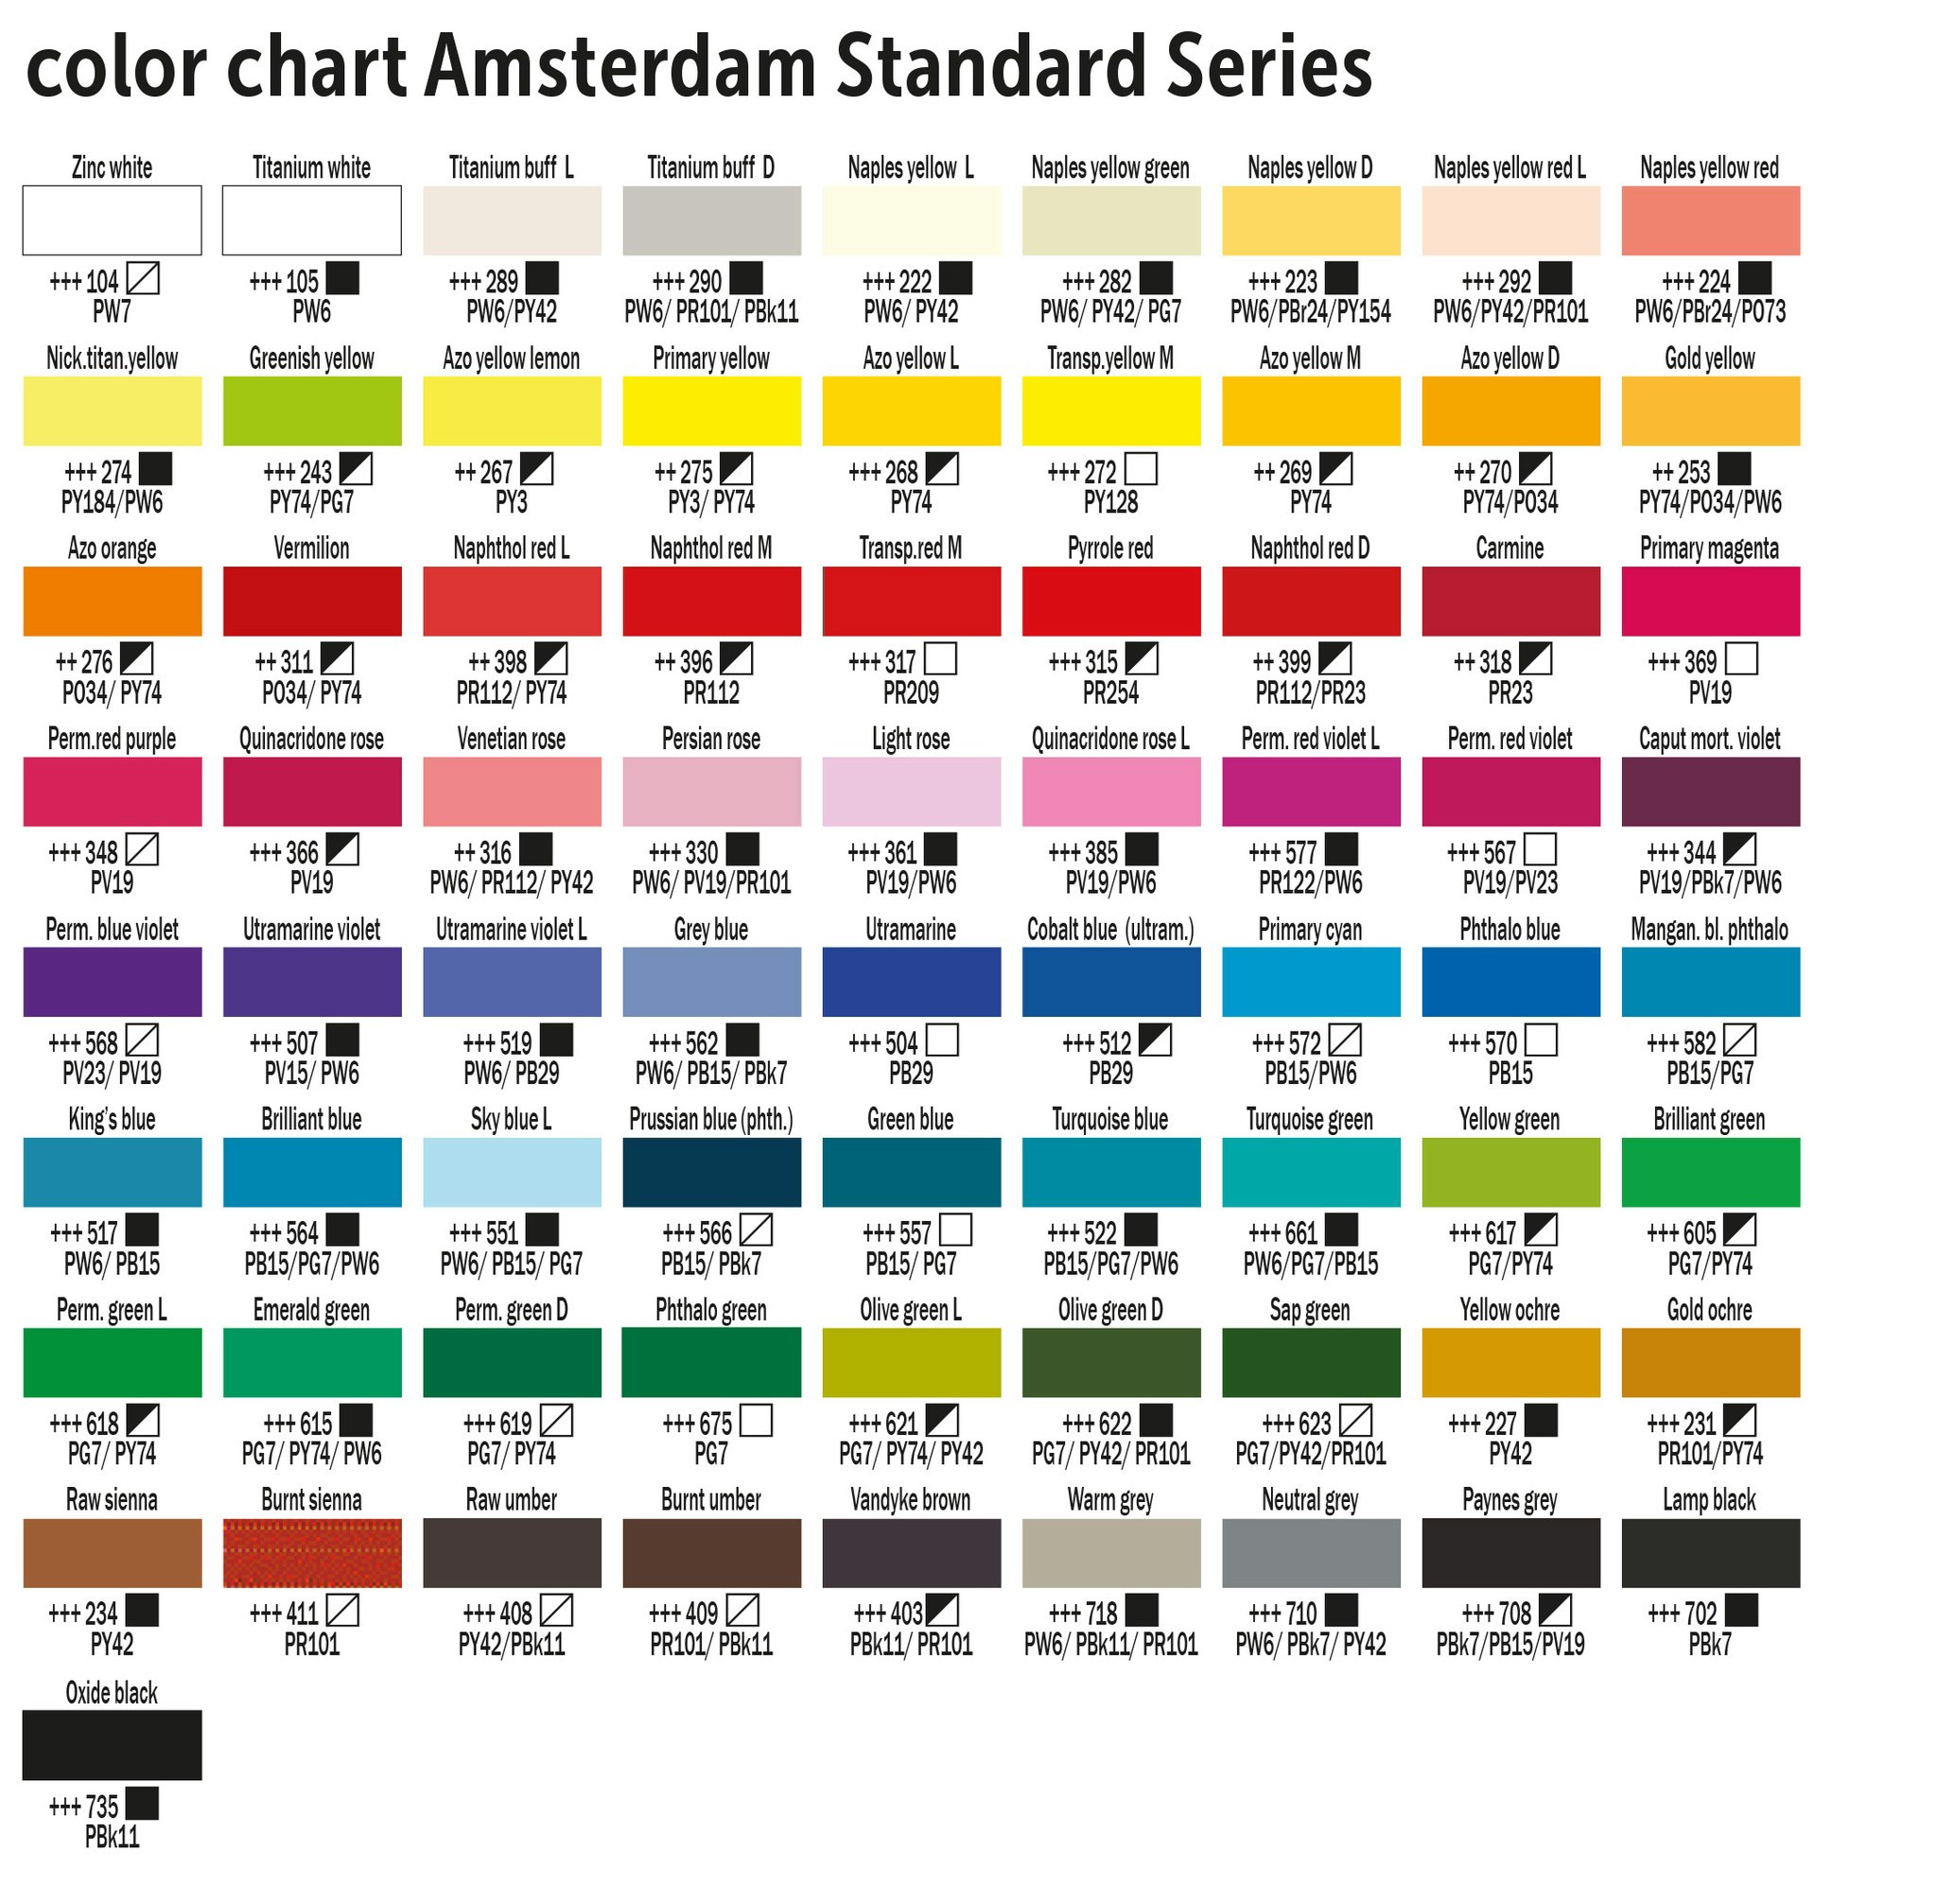 Amsterdam-120ml-507-Ultramarine violet